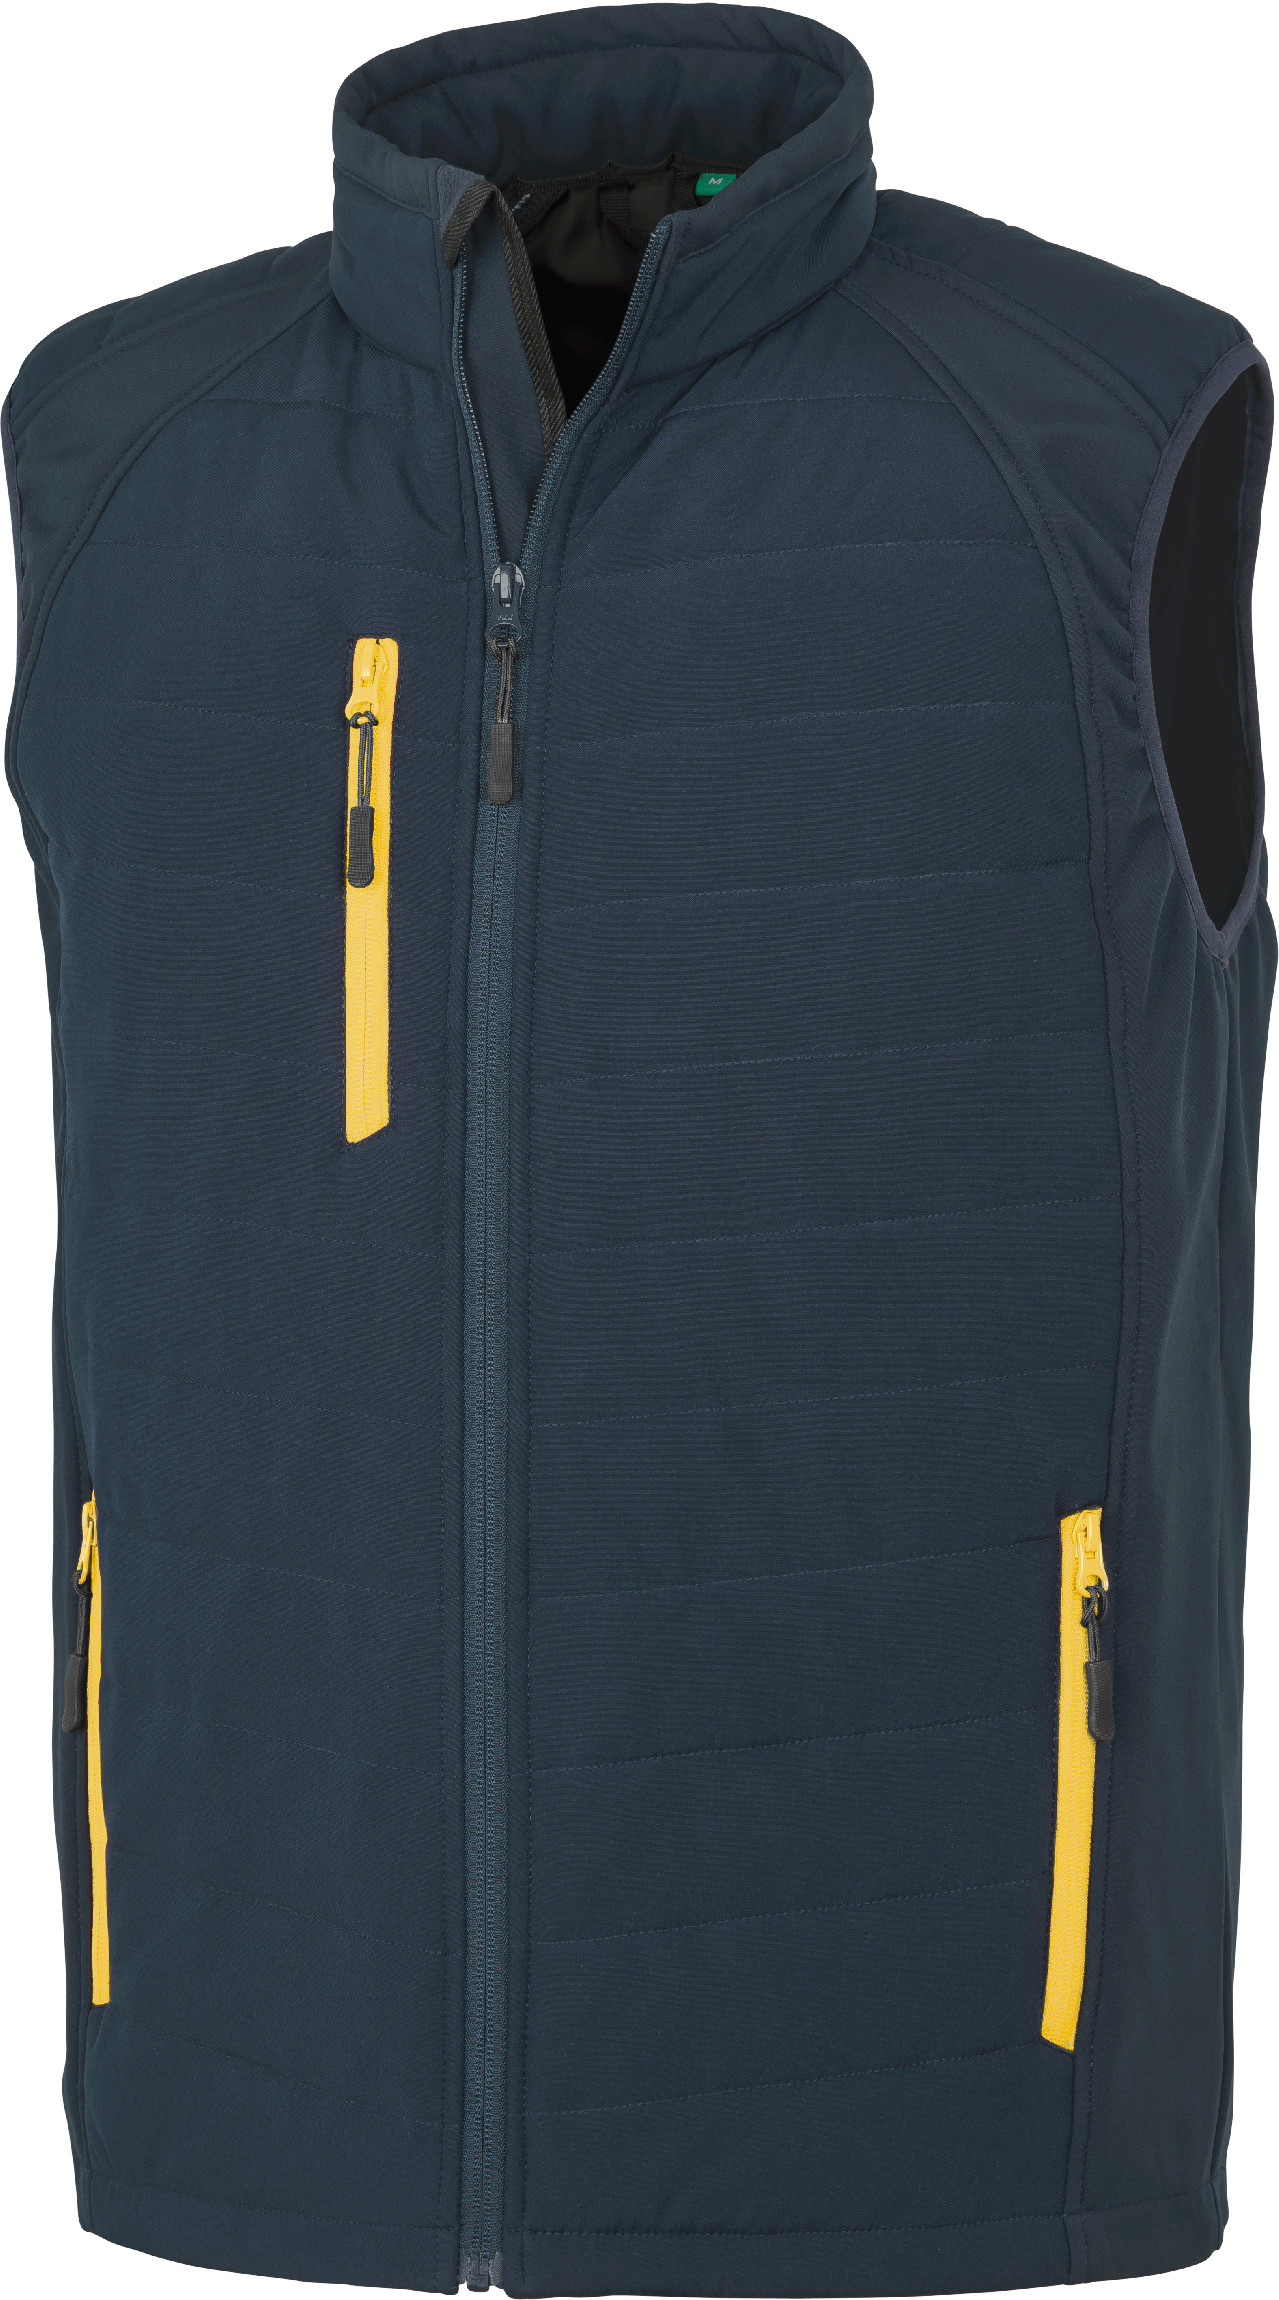 Polstrovaná softshell vesta Compass R238X Barva: námořní modrá-žlutá, Velikost: S